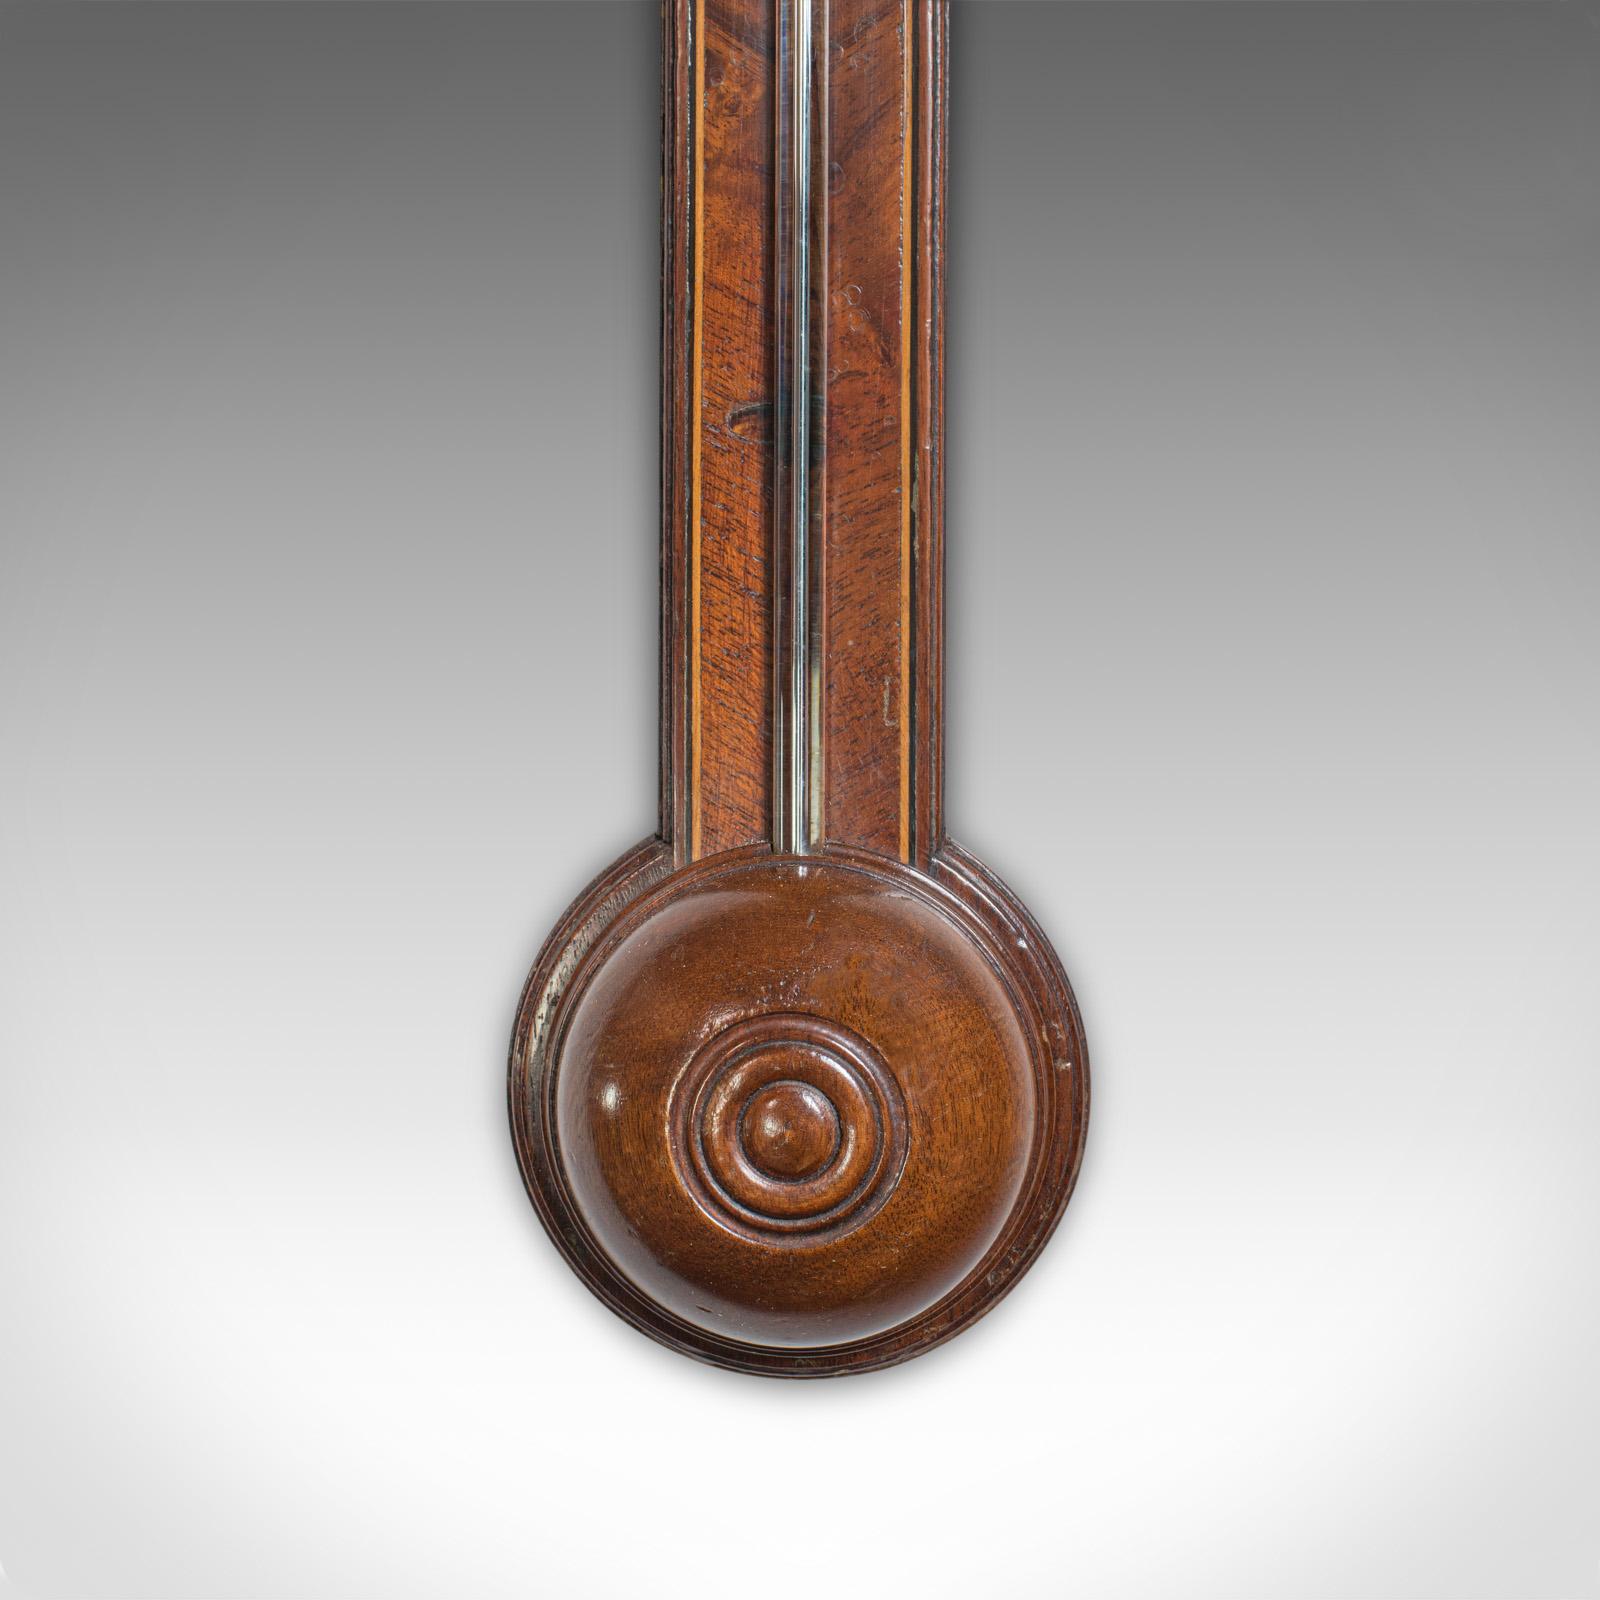 20th Century Antique Comitti Stick Barometer, English, Rosewood, Mahogany, Feather, Fan